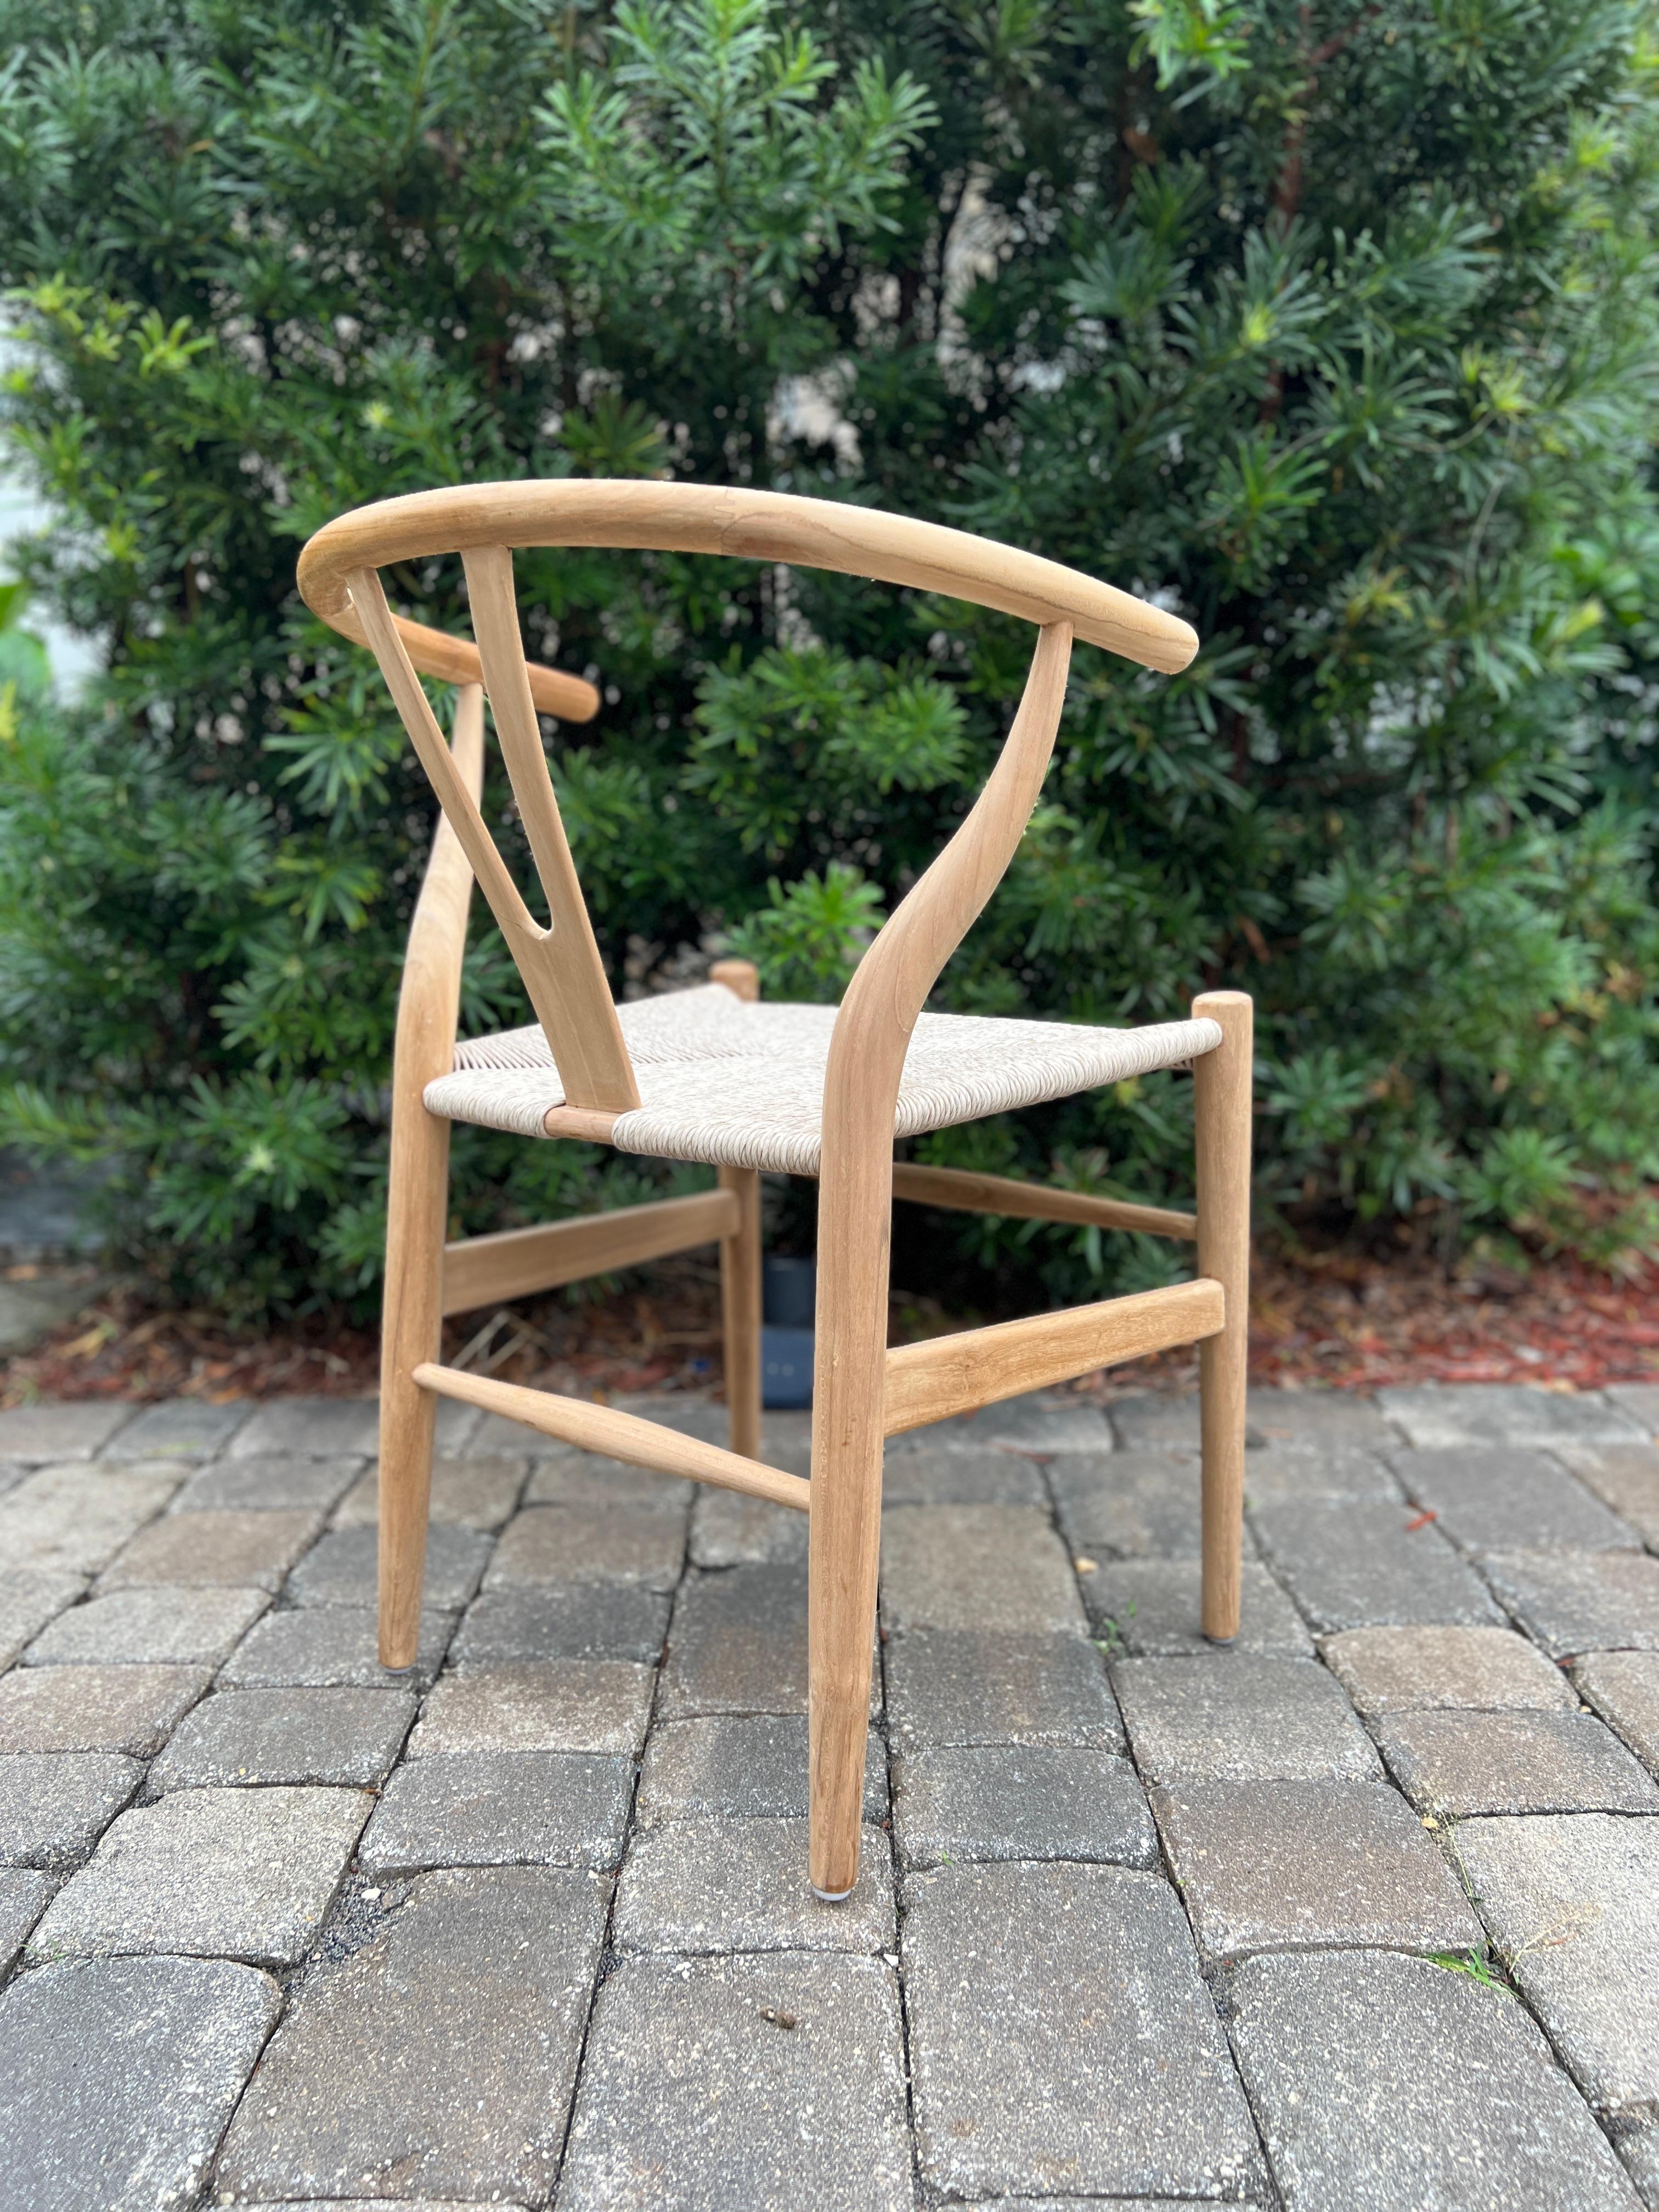 Scandinavian Modern Mid-Century Modern Chair in Natural Teak Wood with Handwoven Seat, Denmark